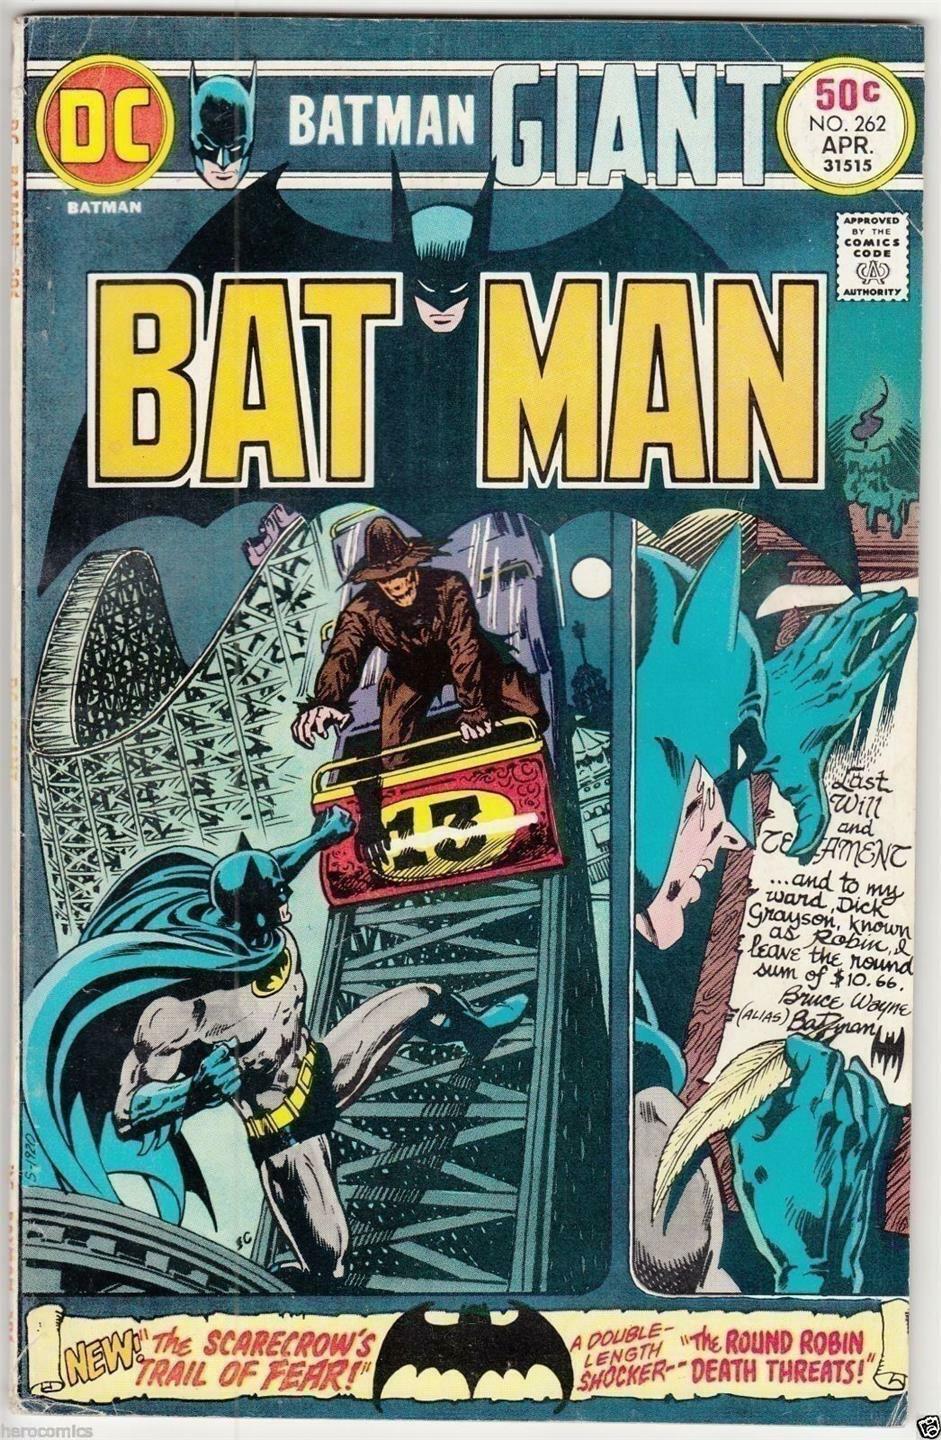 BATMAN #262 DC Silver Age 50 CENT 64 page GIANT -SCARECROW